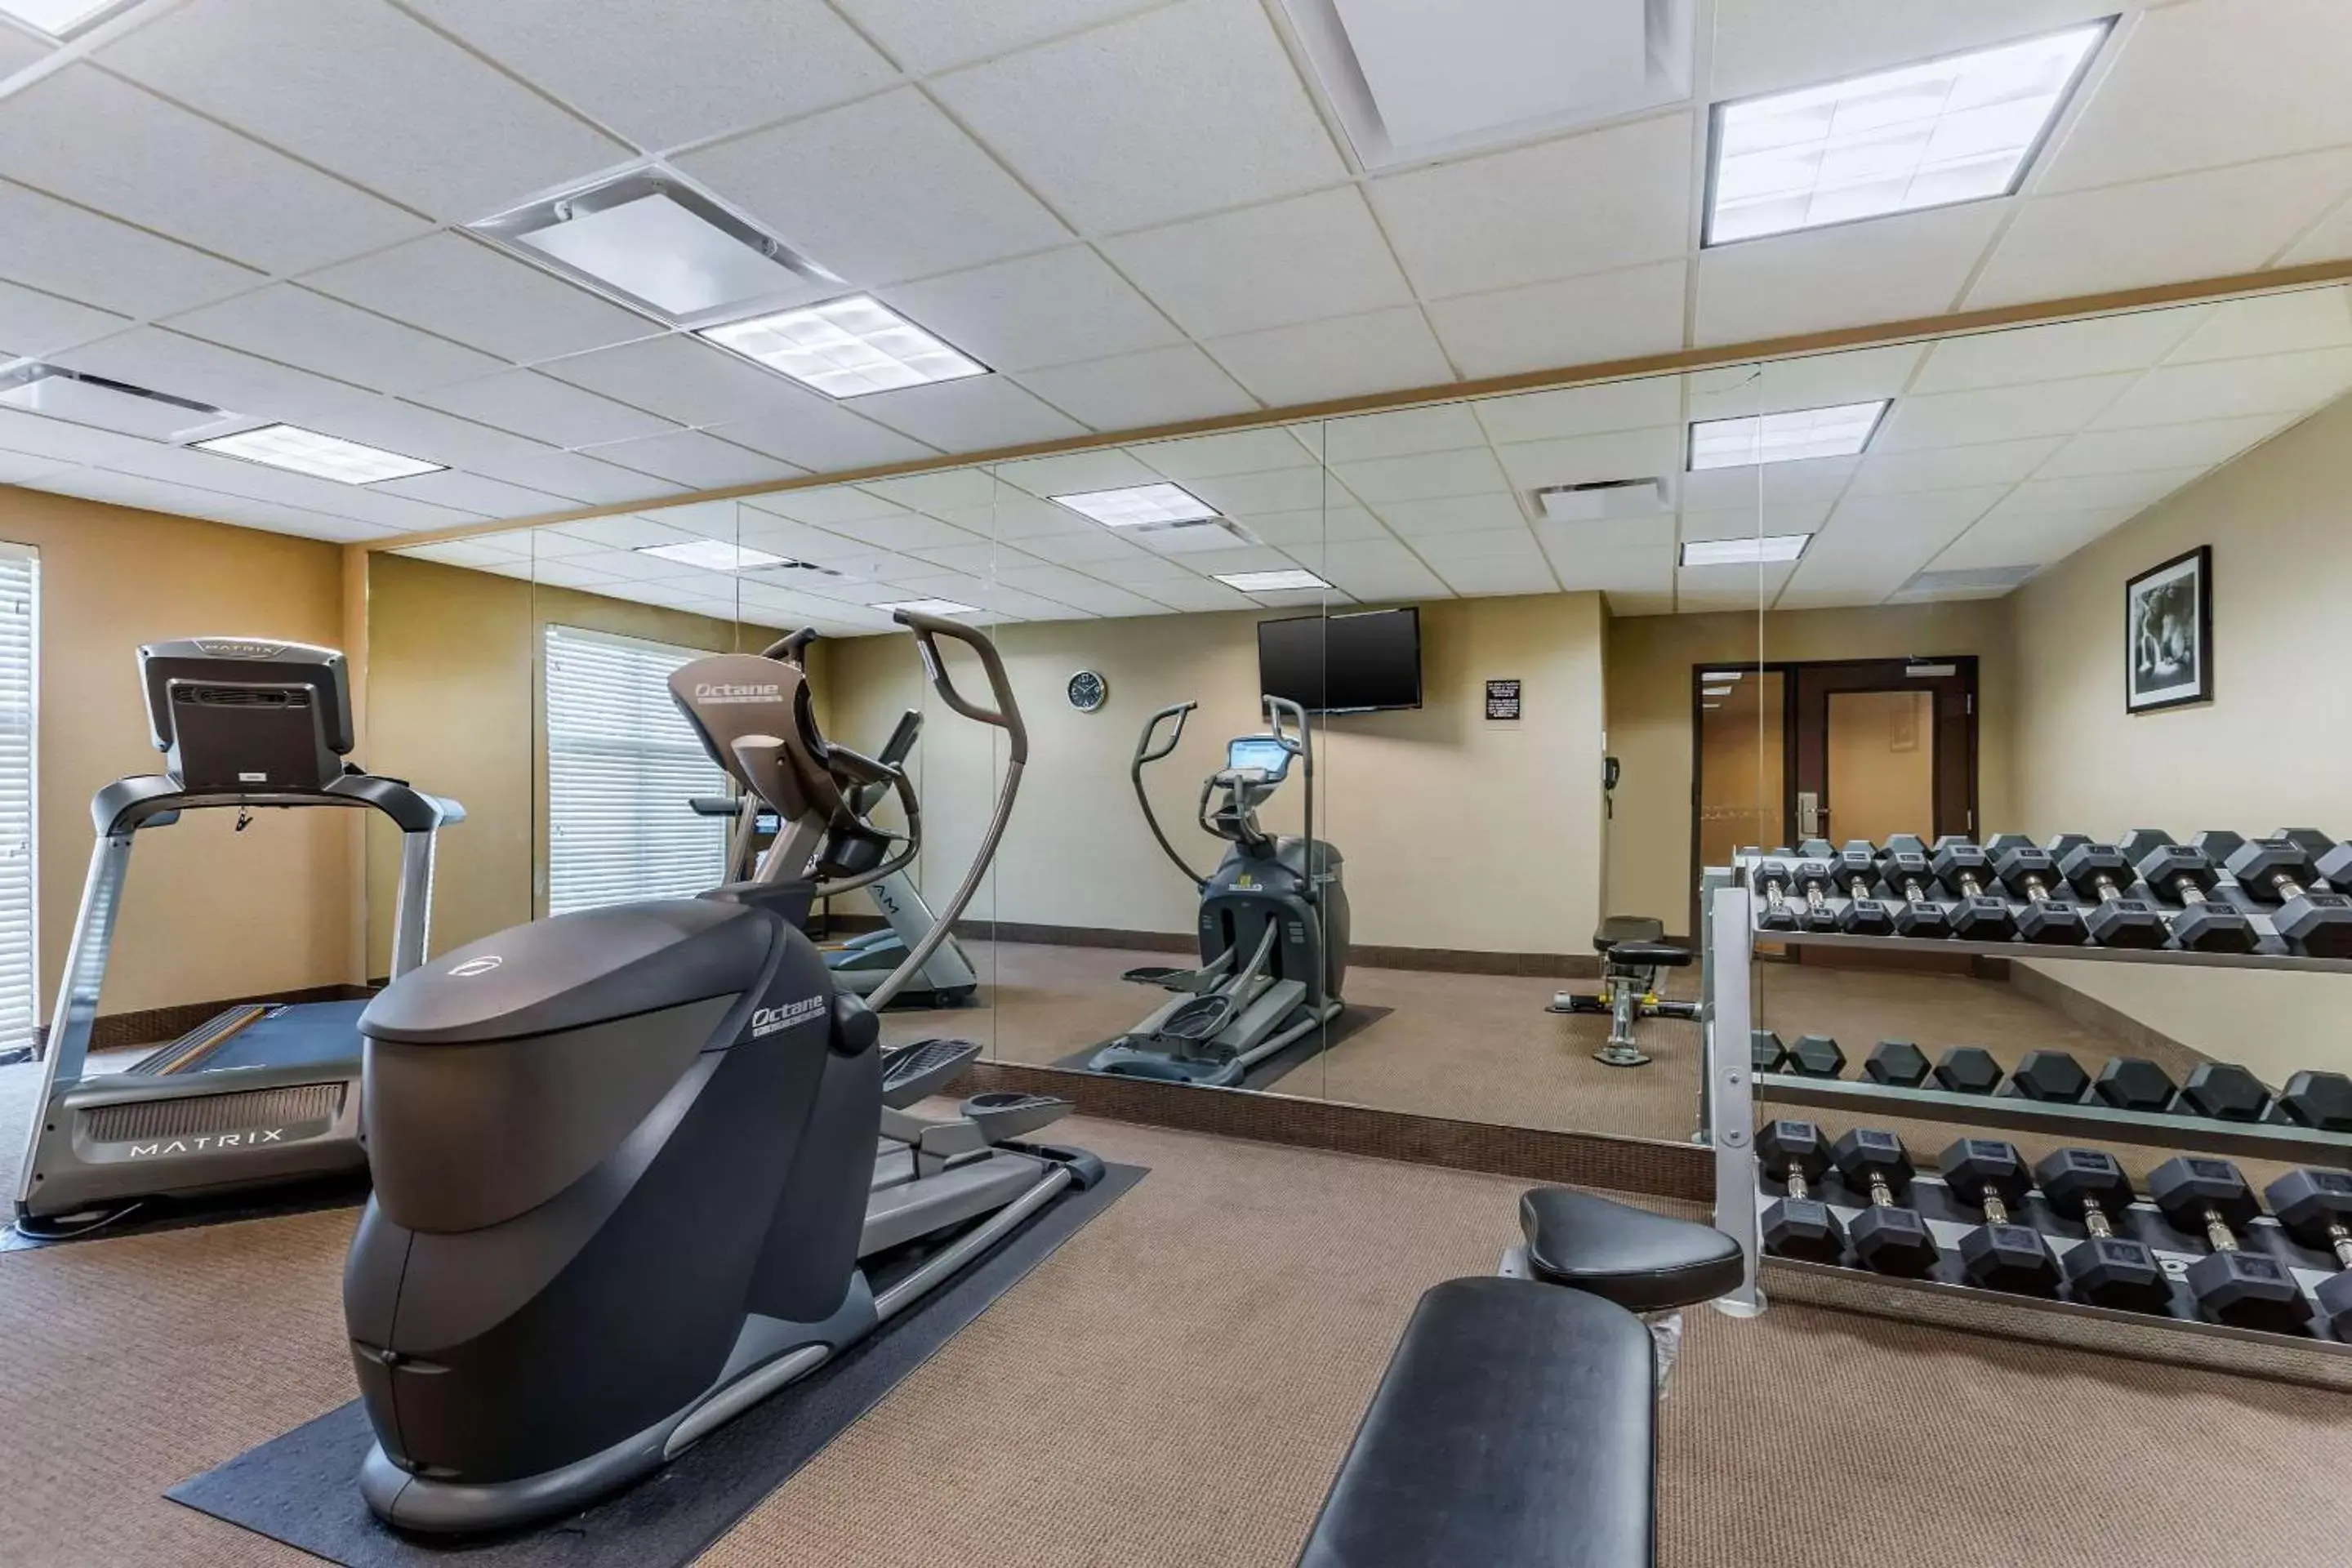 Fitness centre/facilities, Fitness Center/Facilities in Sleep Inn & Suites Ames near ISU Campus